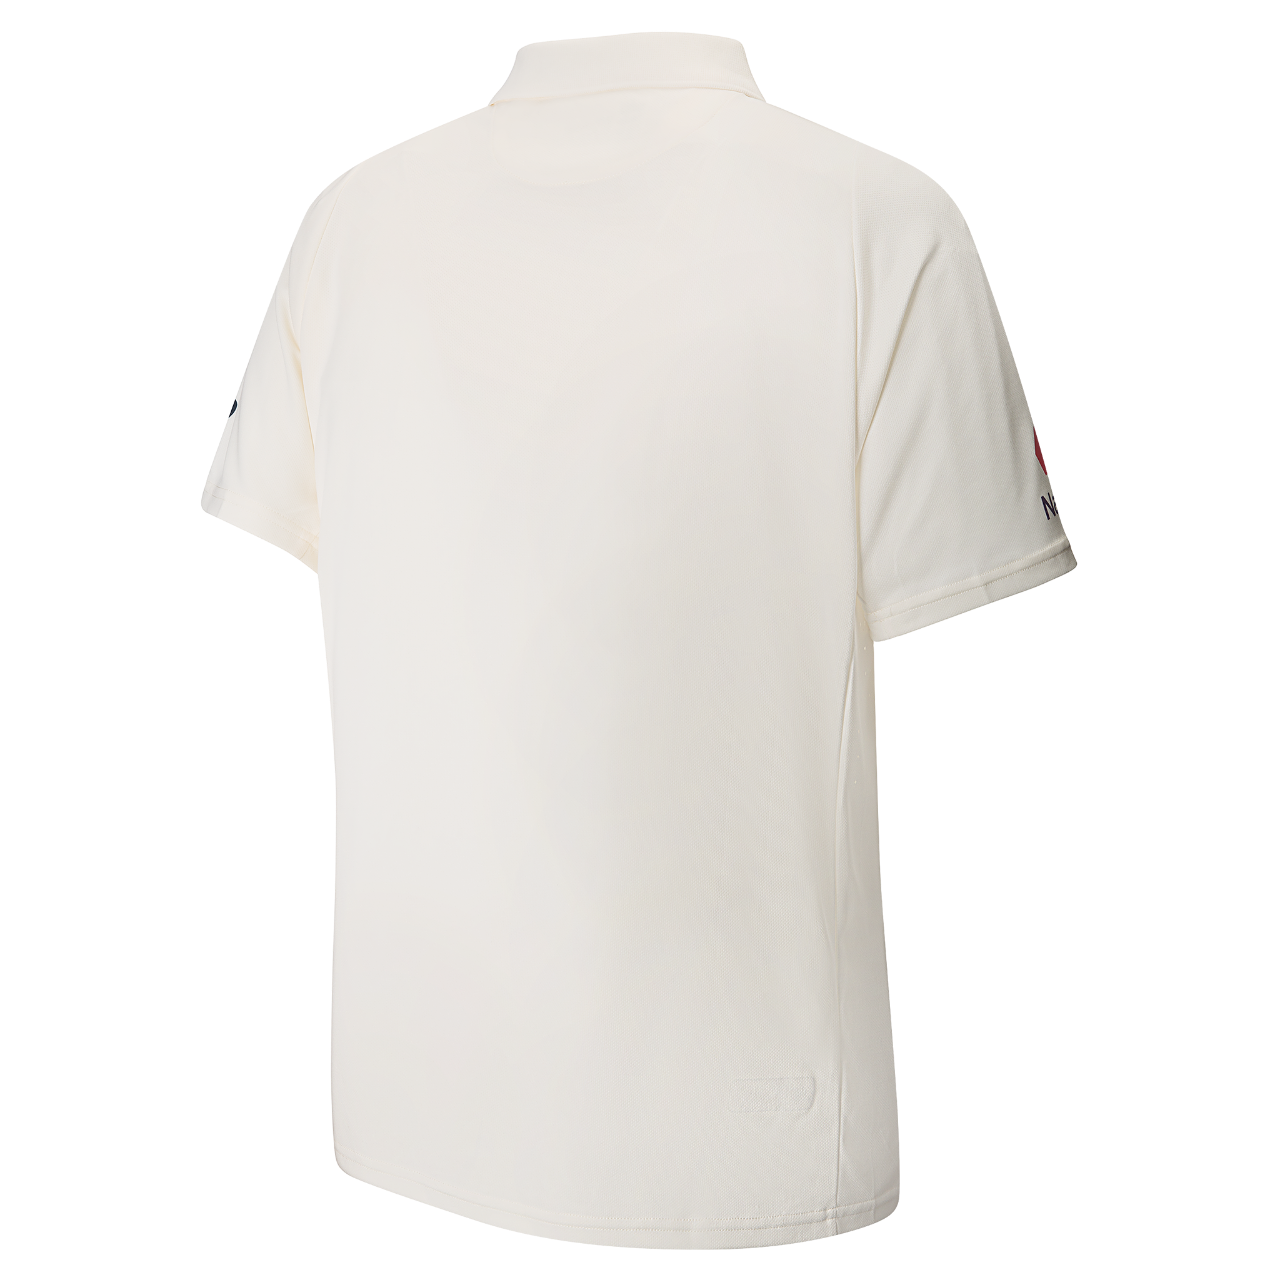 england cricket replica shirts